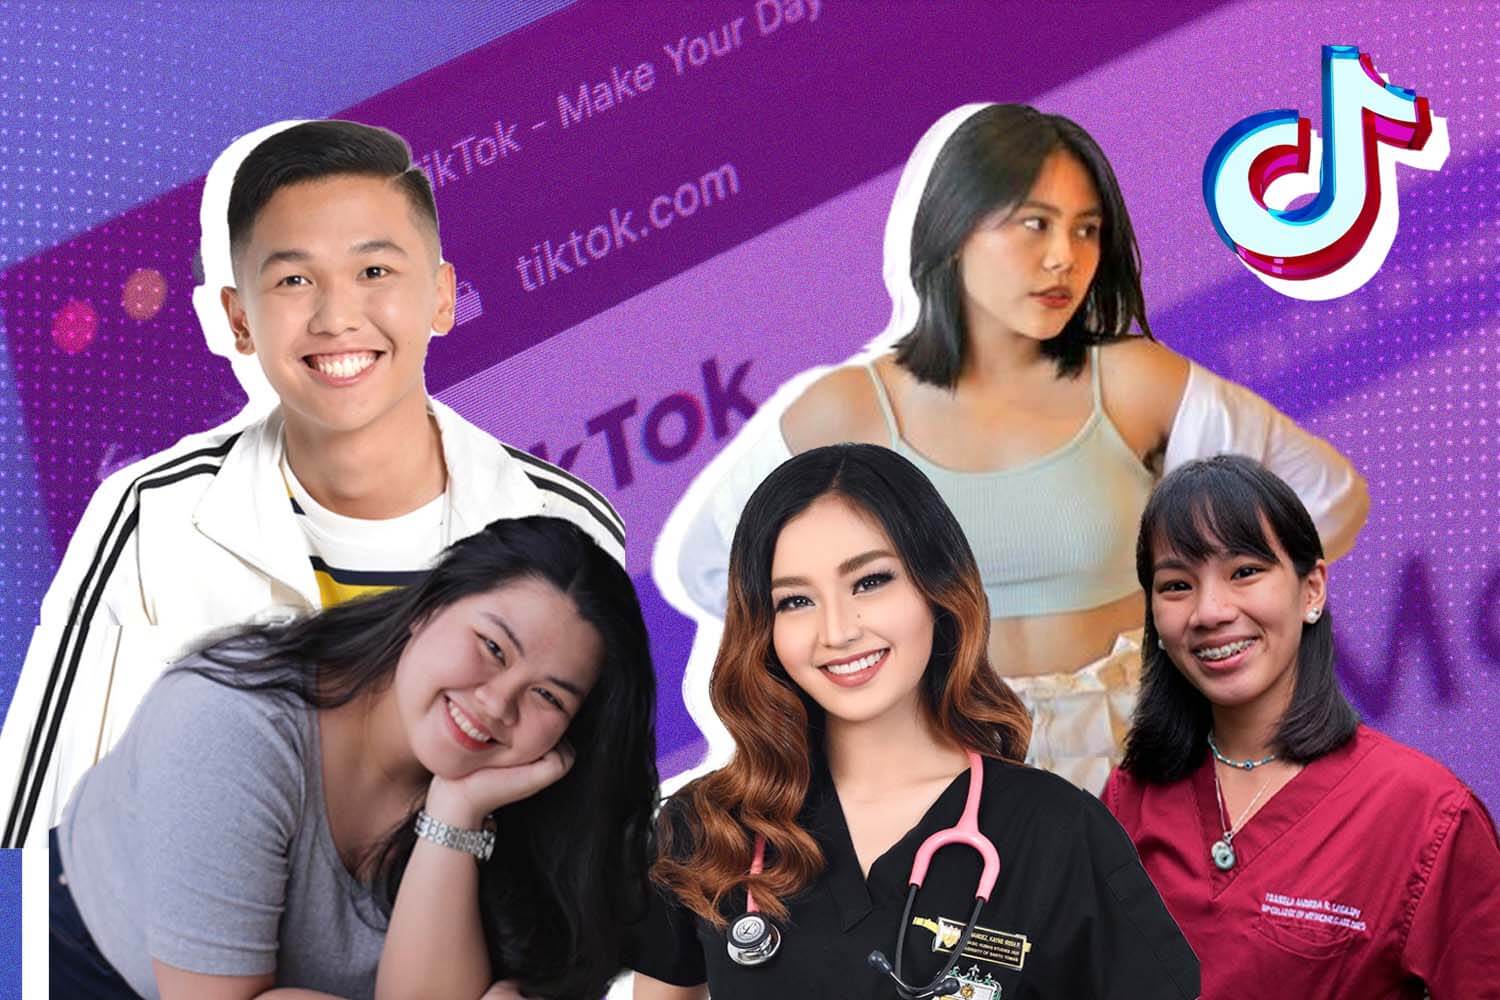 Filipino med students to follow on TikTok